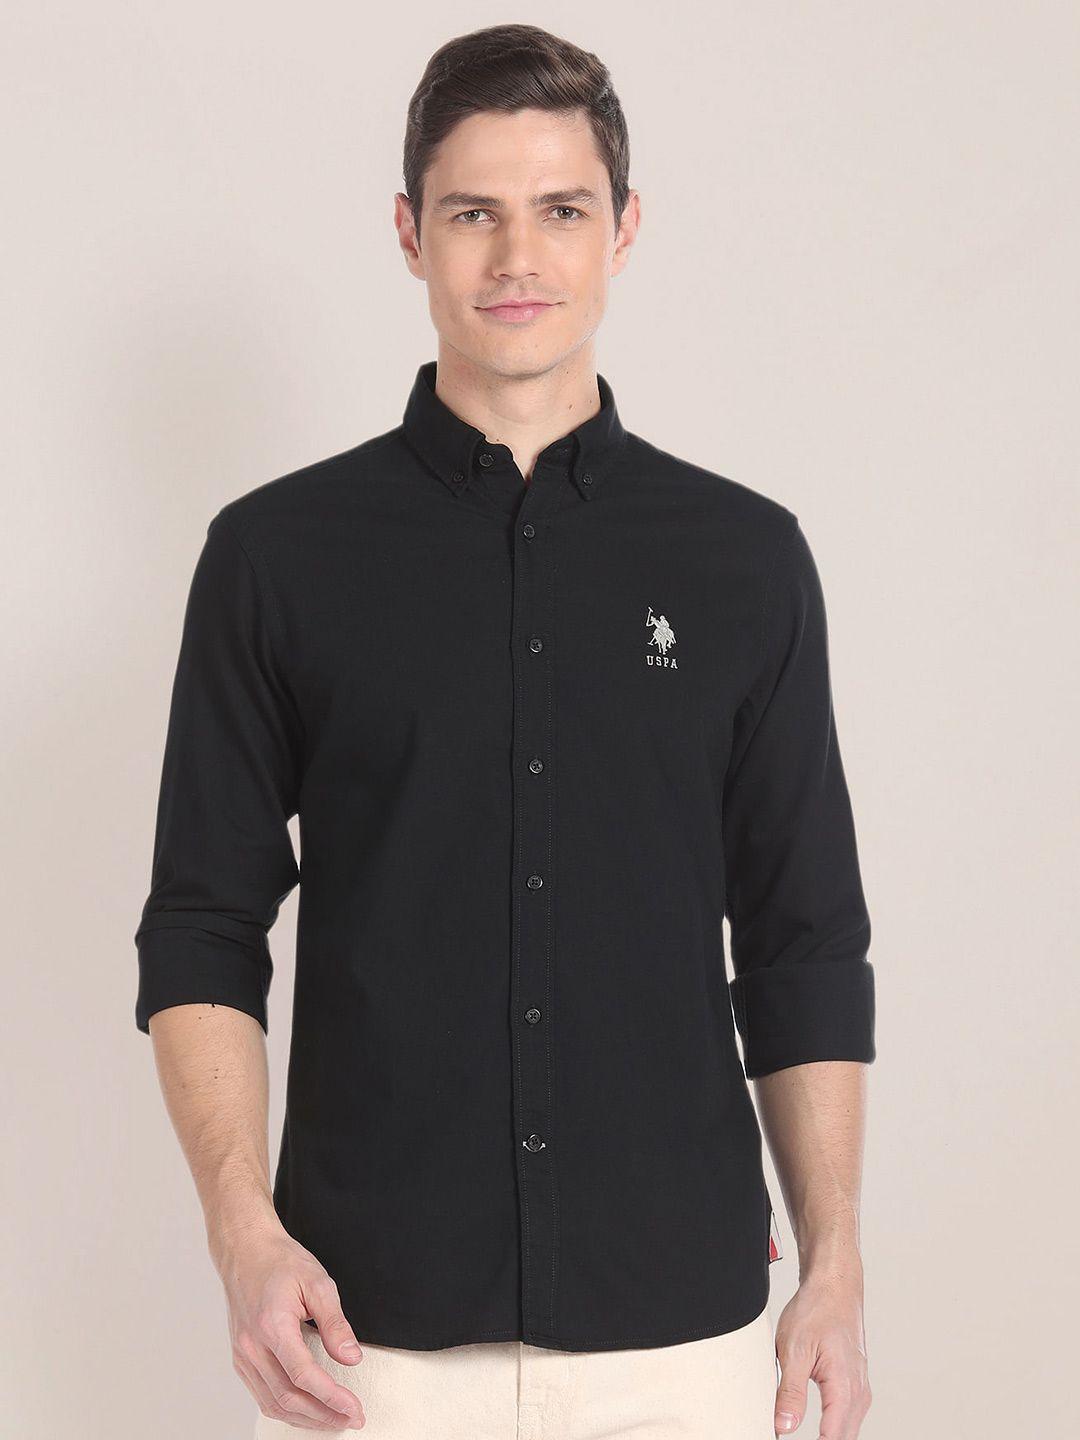 u.s. polo assn. button down collar regular fit premium cotton casual shirt